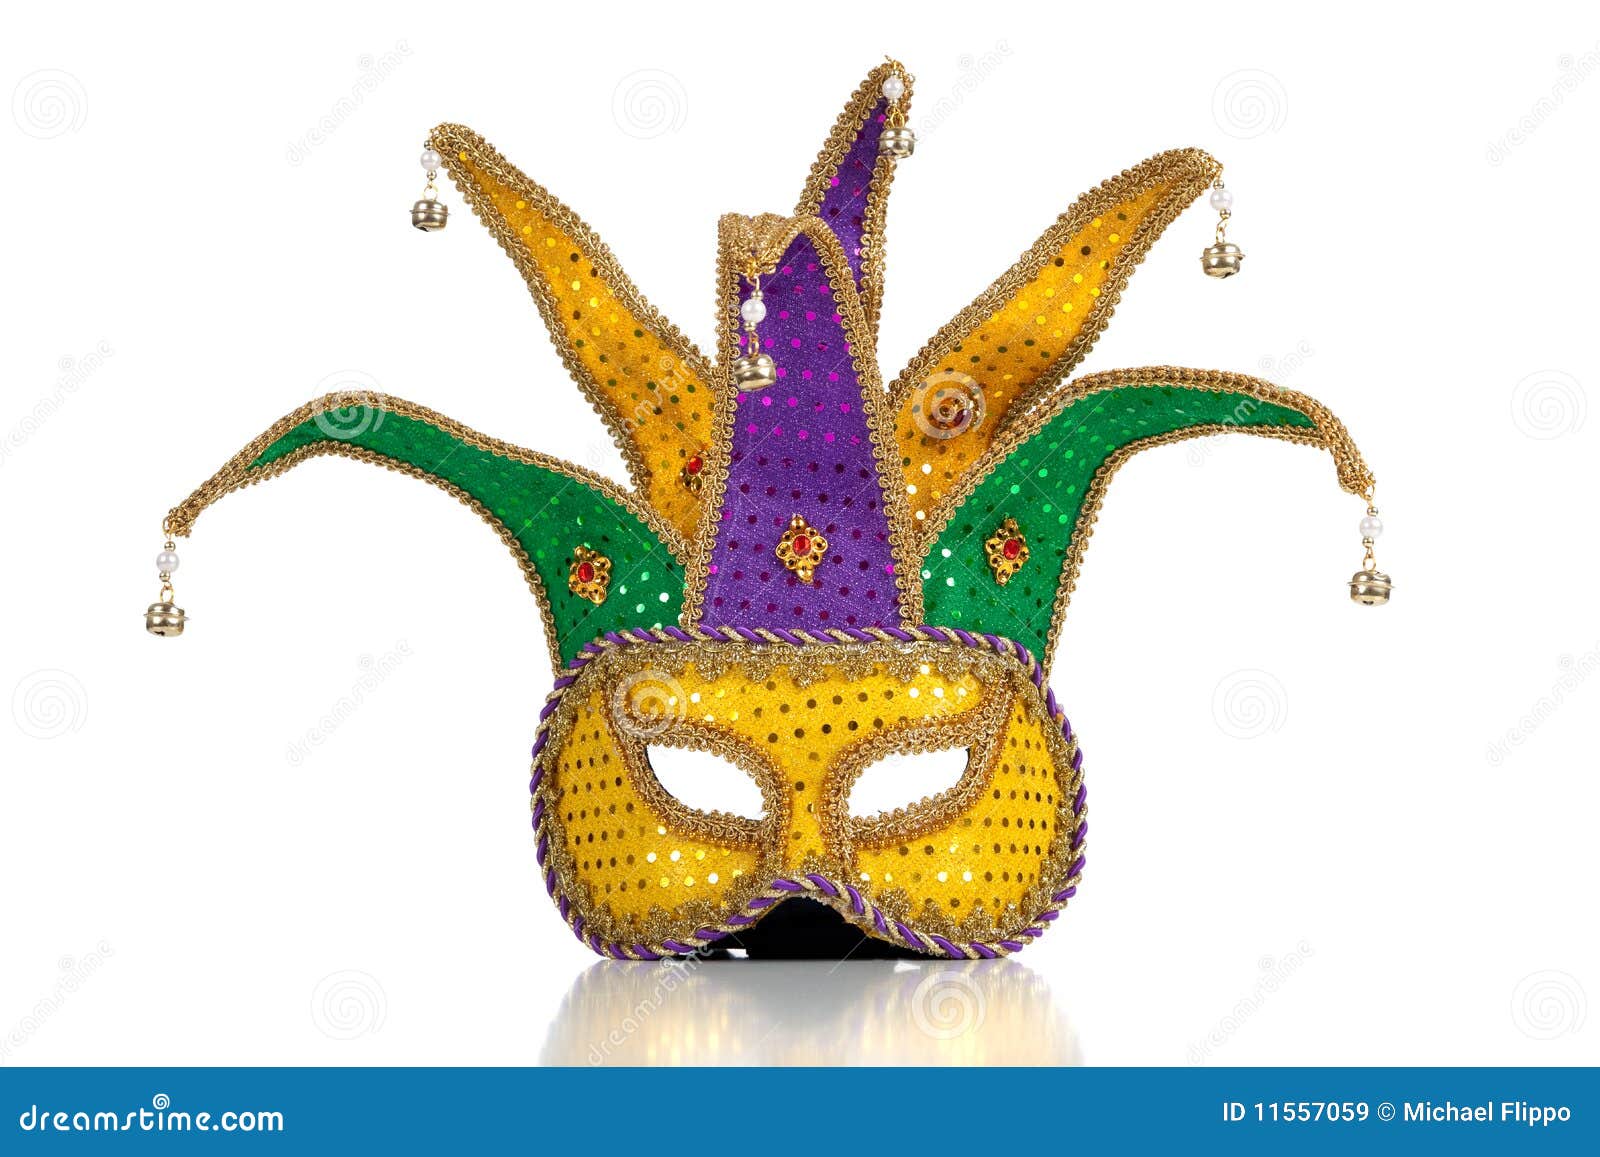 gold, purple and green mardi gra mask